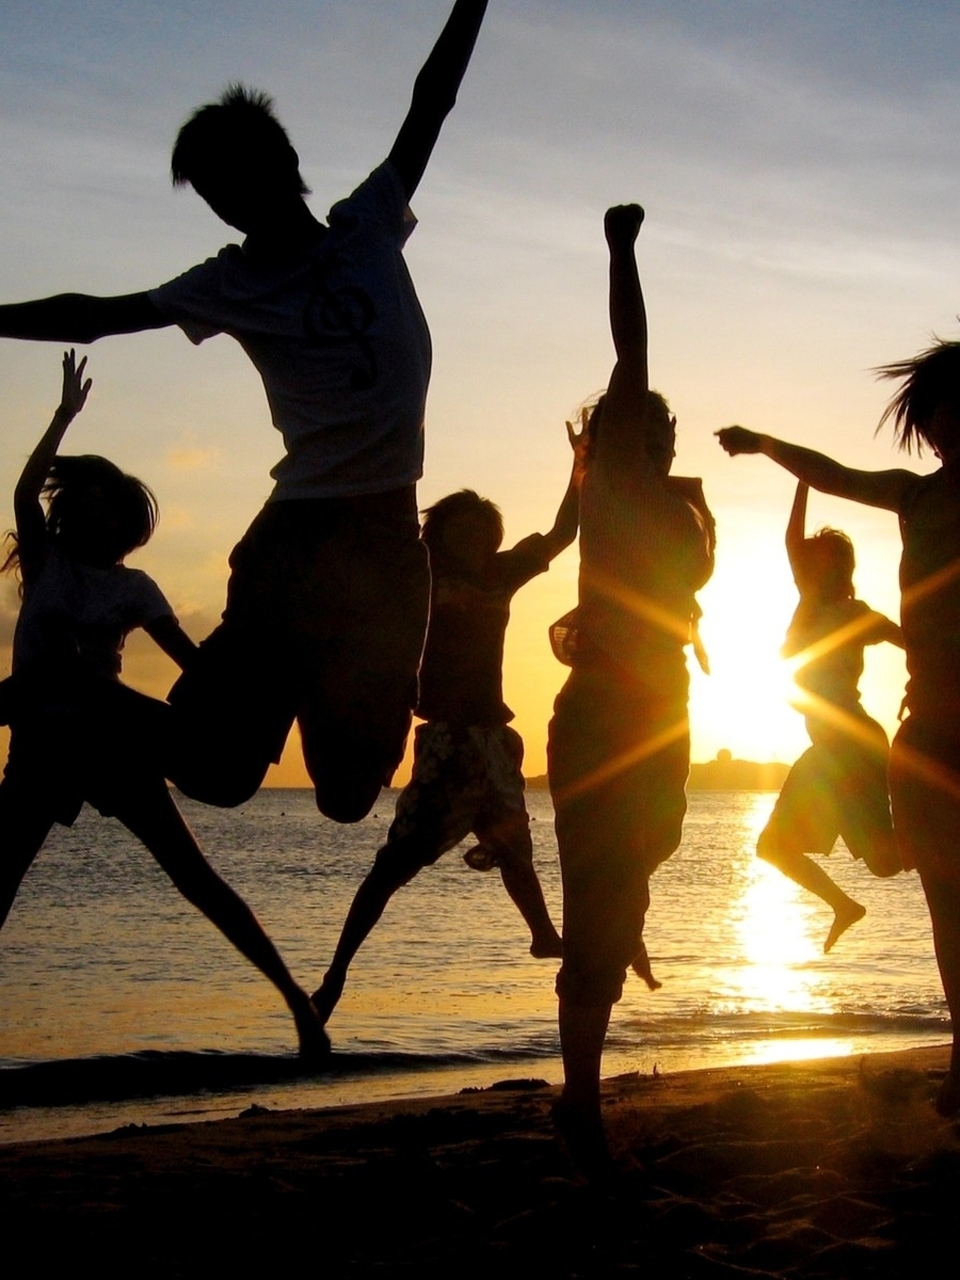 Image: People, silhouette, vacation, friends, fun, mood, sea, beach, sunset, sun, horizon, sky, clouds